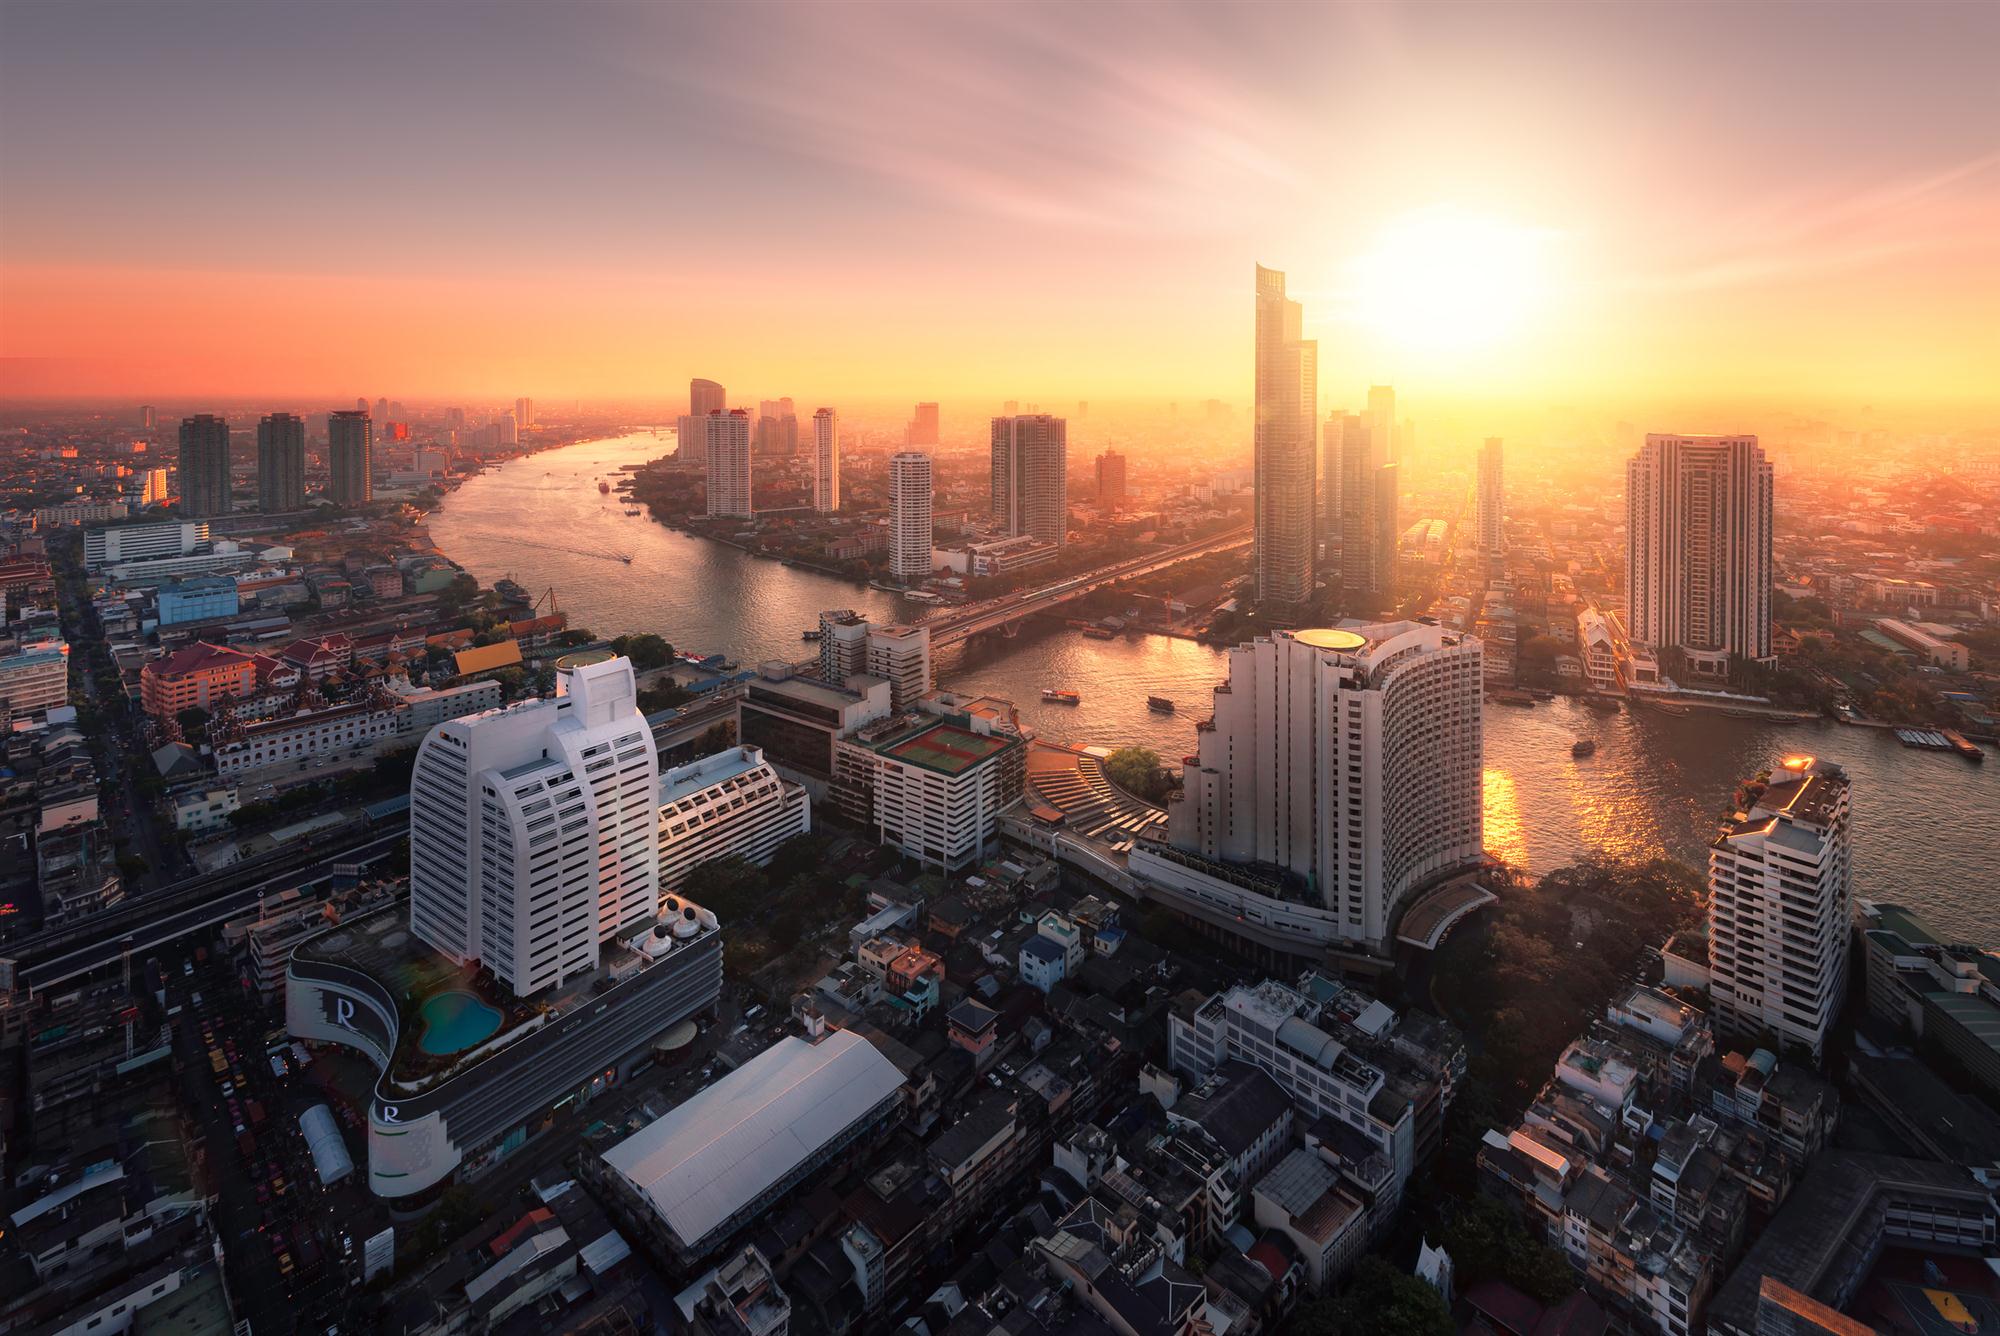 Self Photos / Files - Chao Praya Bangkok skyline Fotolia_83162816_L